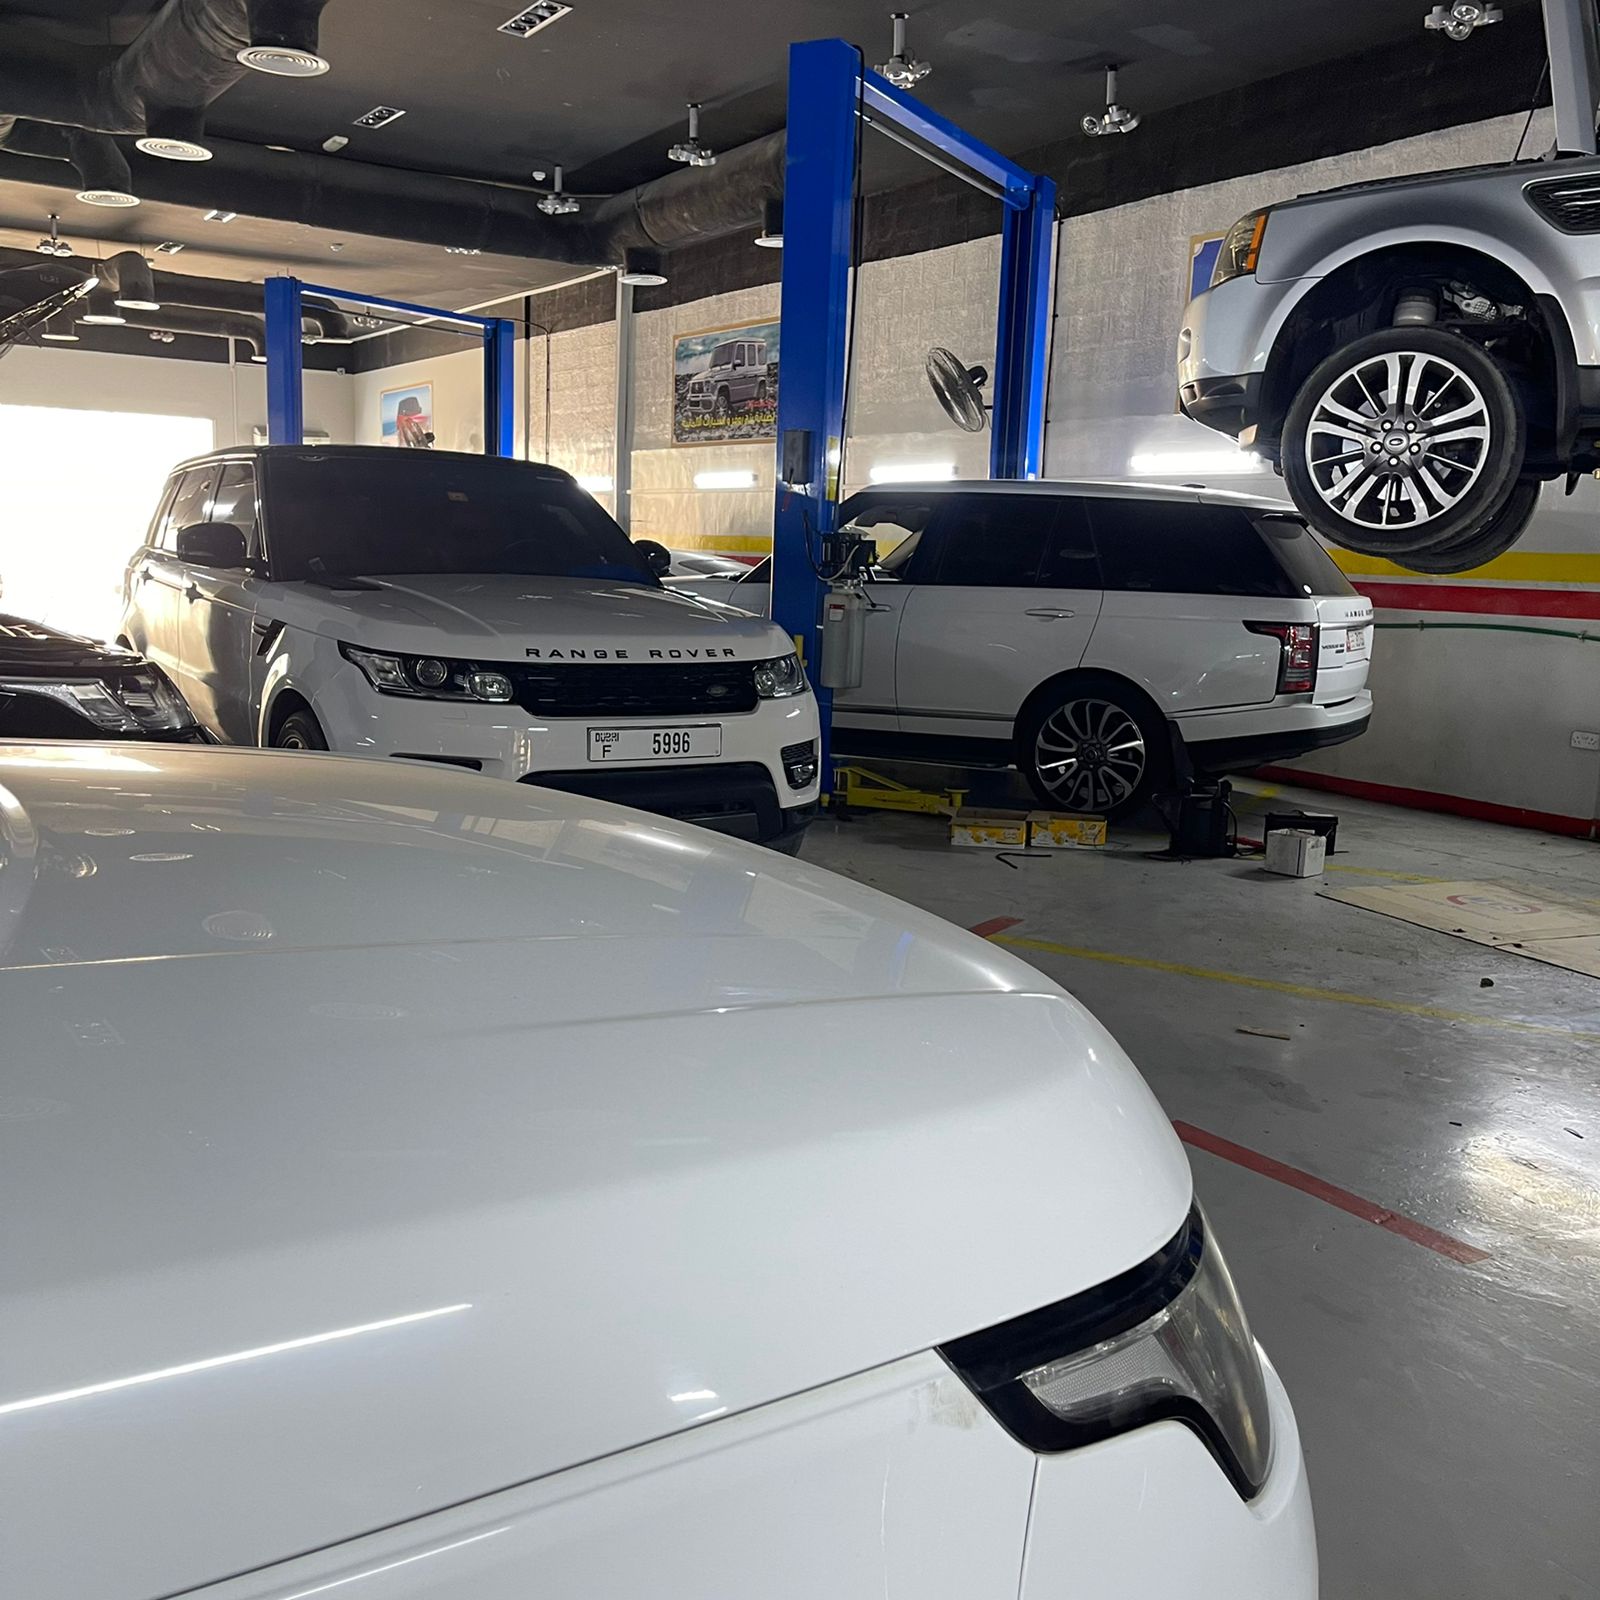 Range Rover Service Center In Sharjah